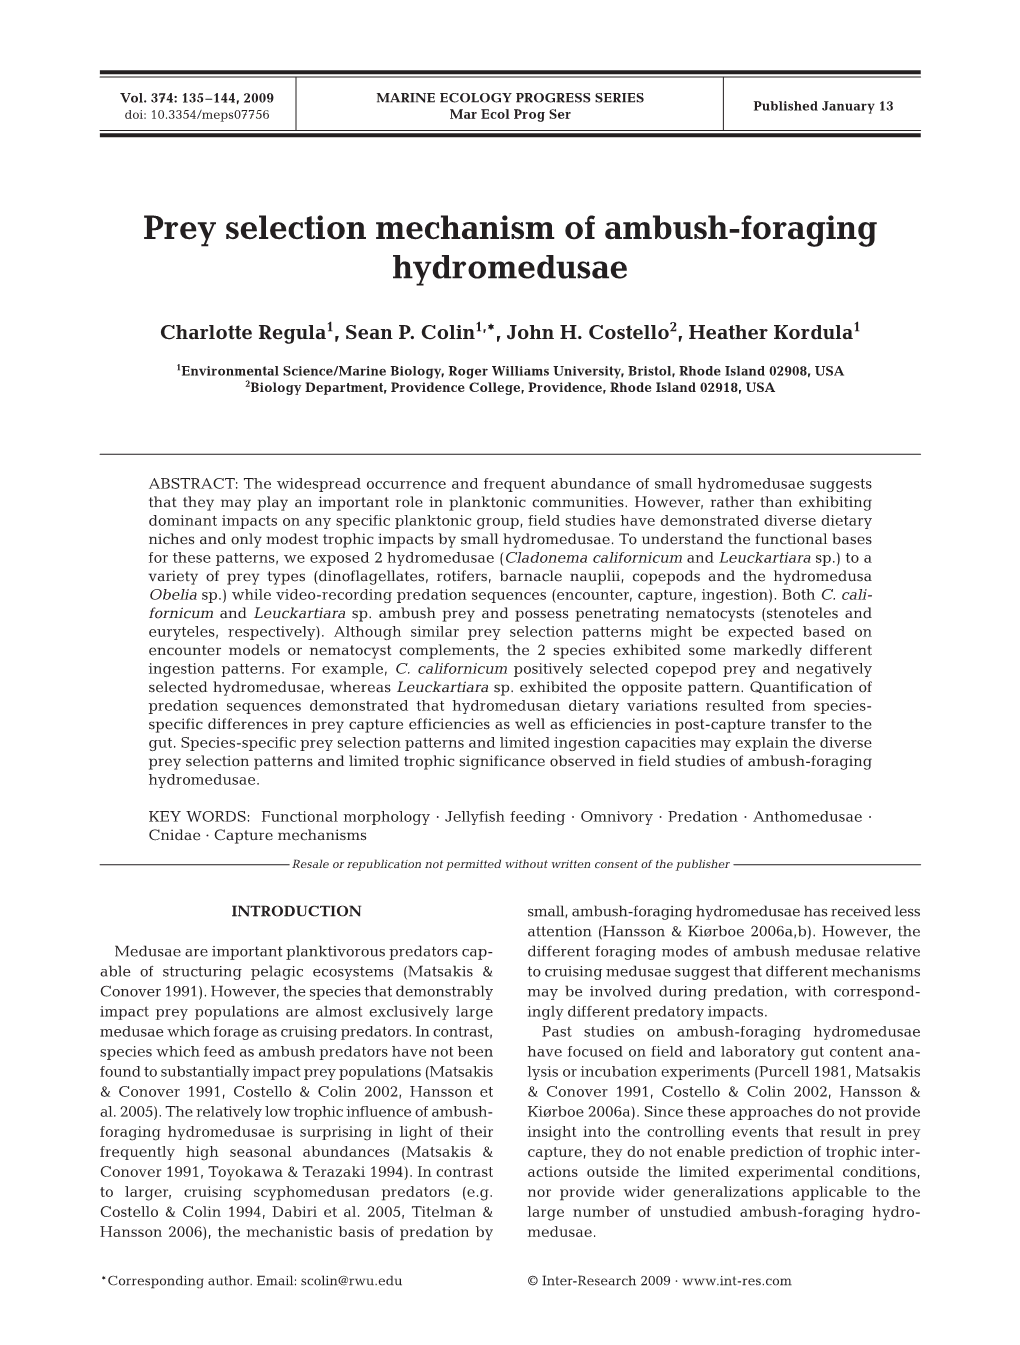 Prey Selection Mechanism of Ambush-Foraging Hydromedusae